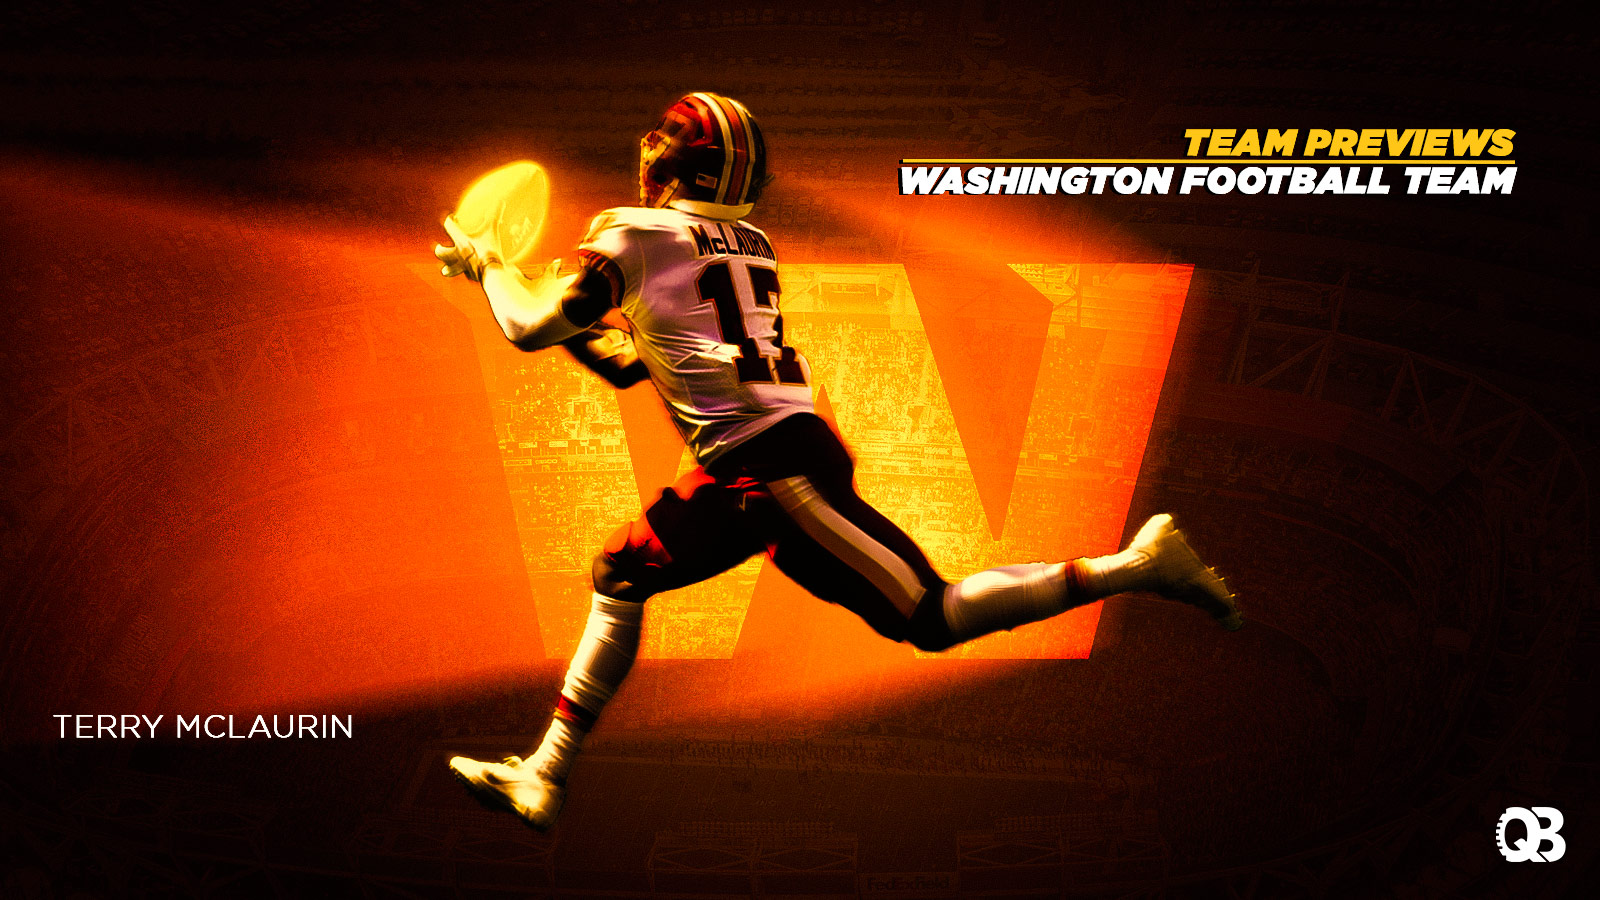 Washington Football Team Wallpapers